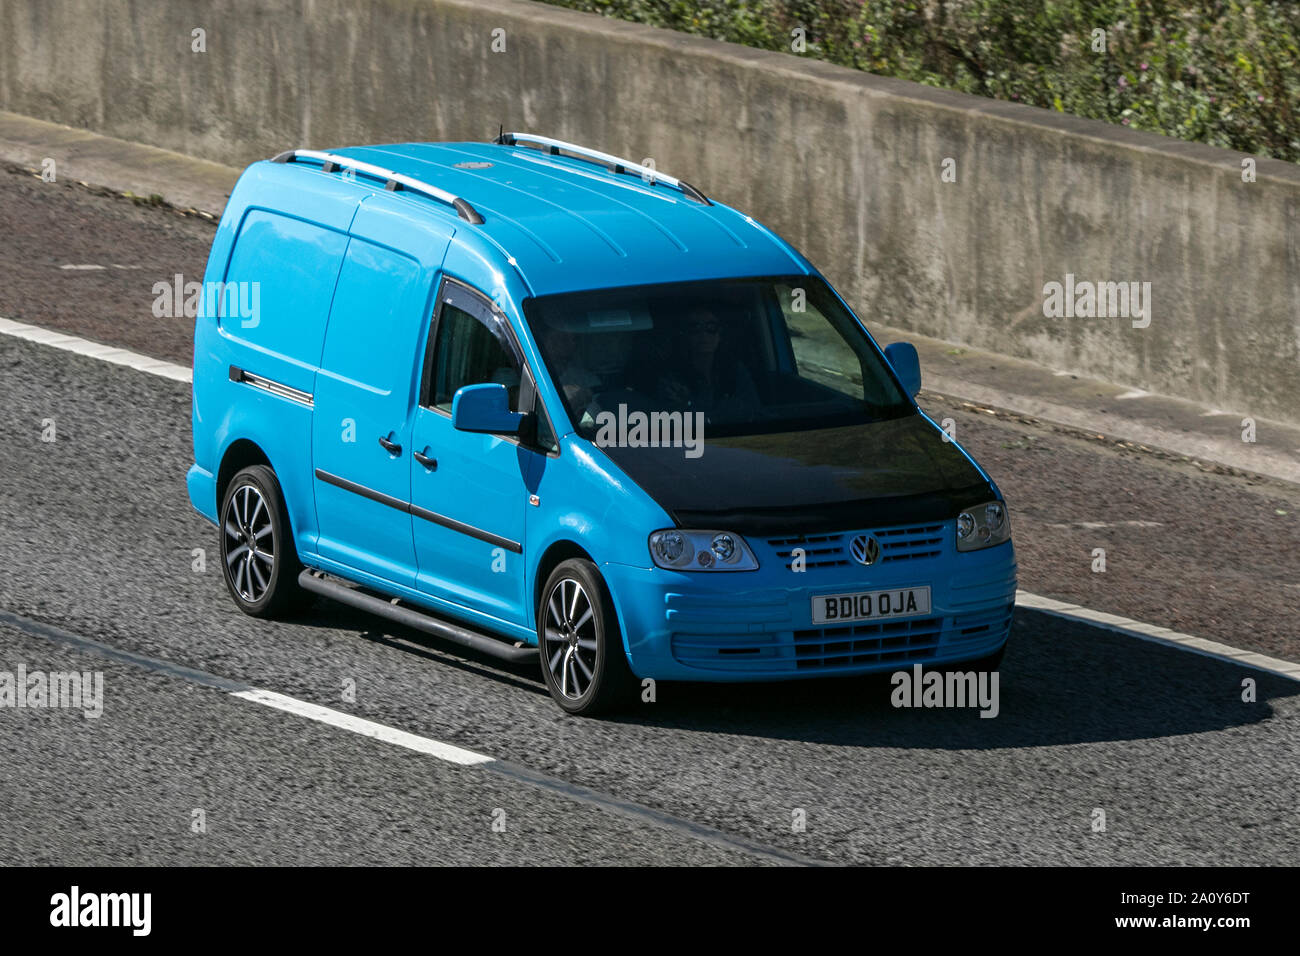 Volkswagen caddy van hi-res stock photography and images - Alamy